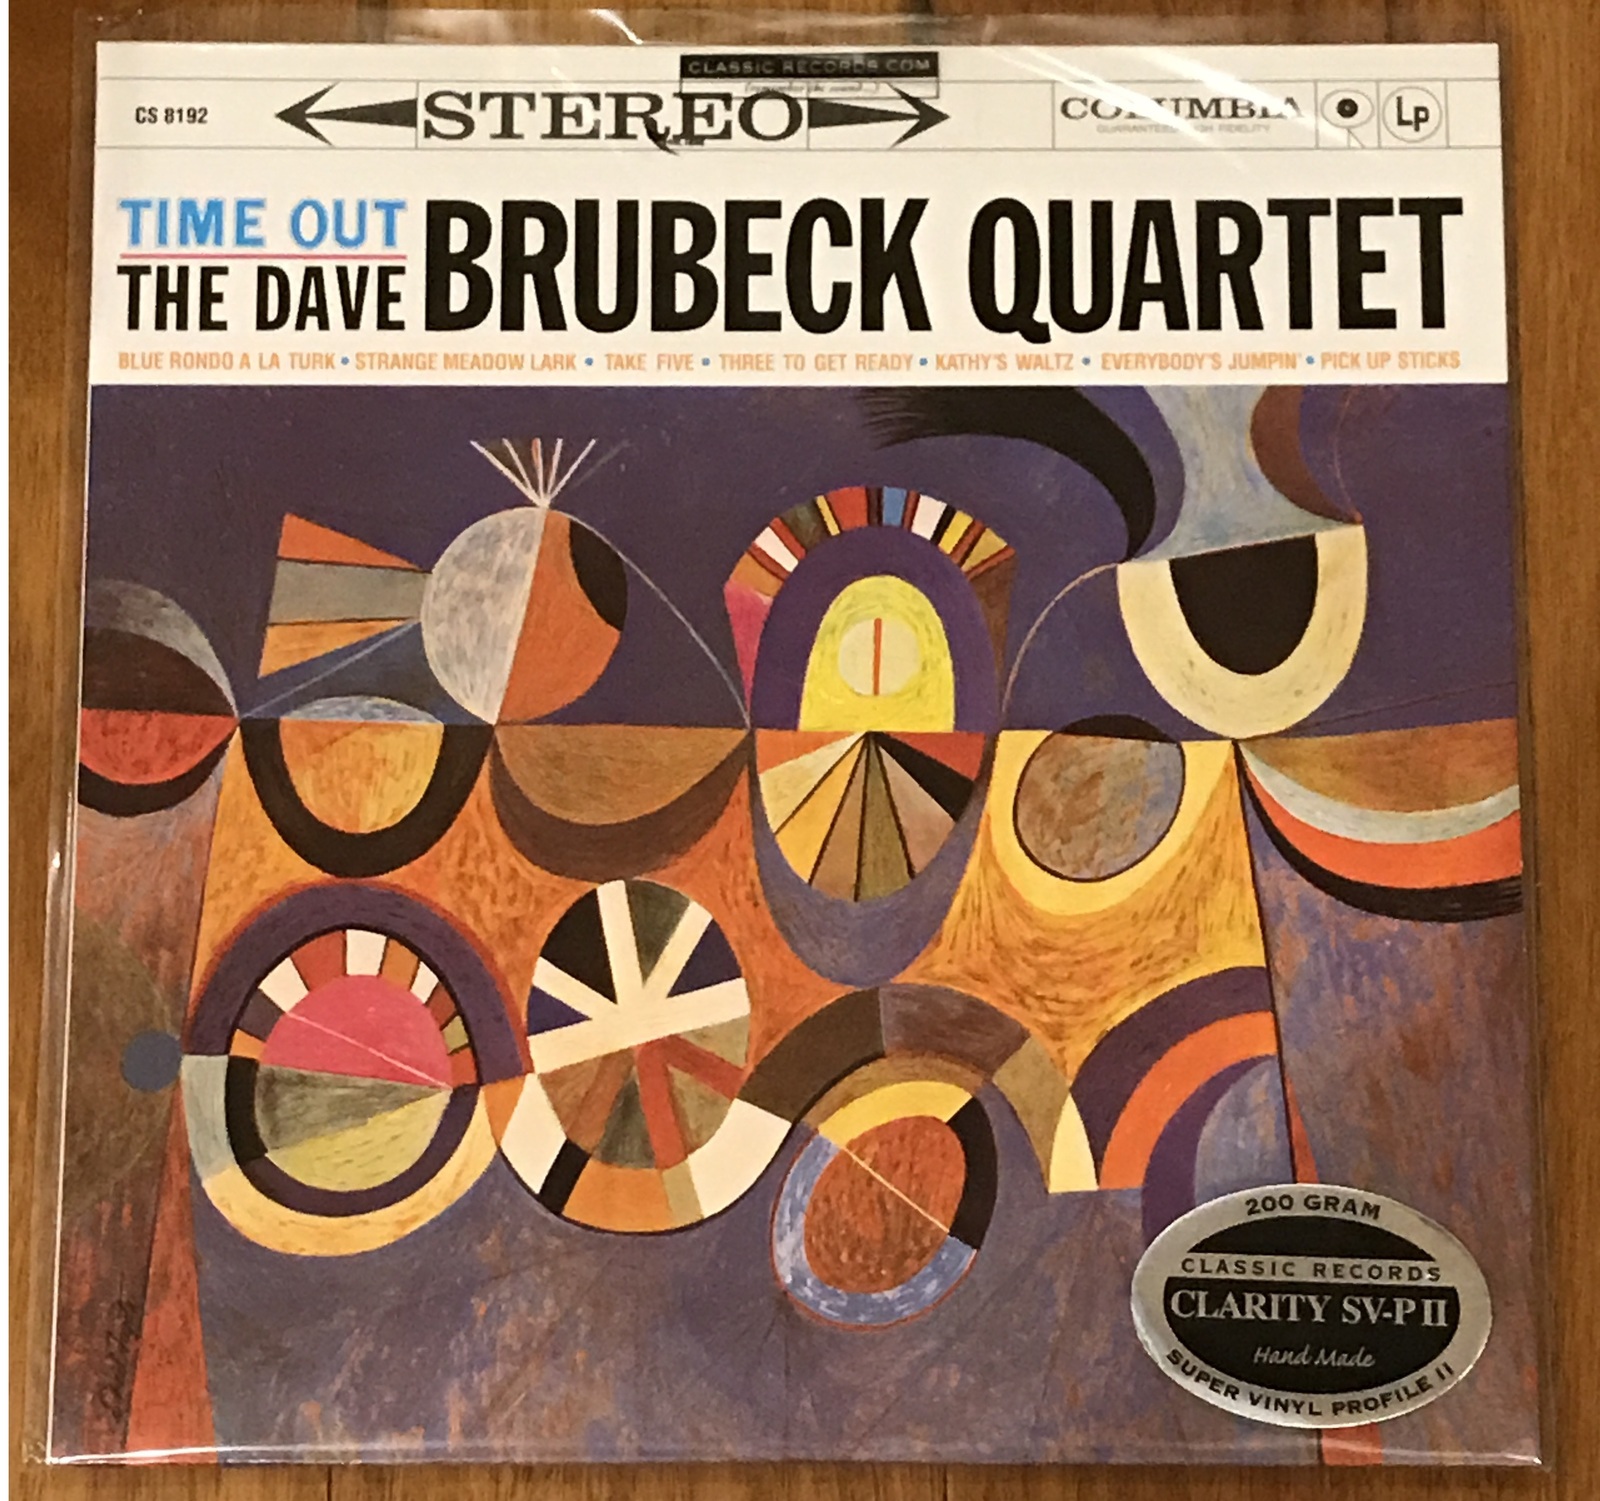 The Dave Brubeck Quartet Time Out Classic Records 200gm vinyl LP ...